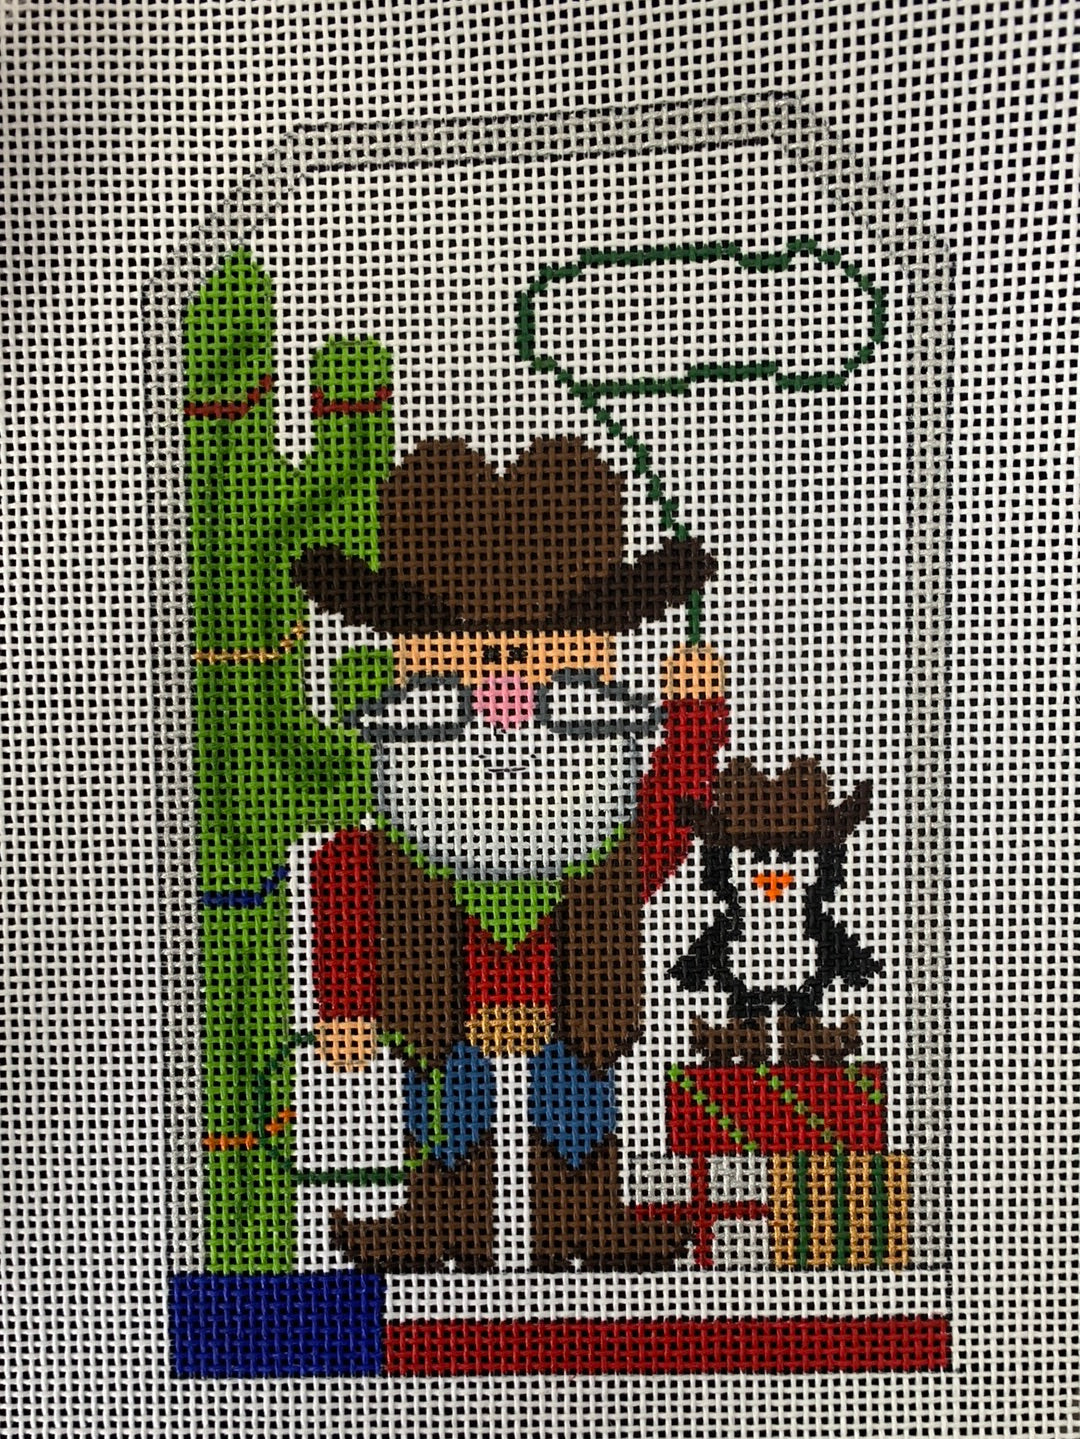 Cowboy Santa with Stitch Guide